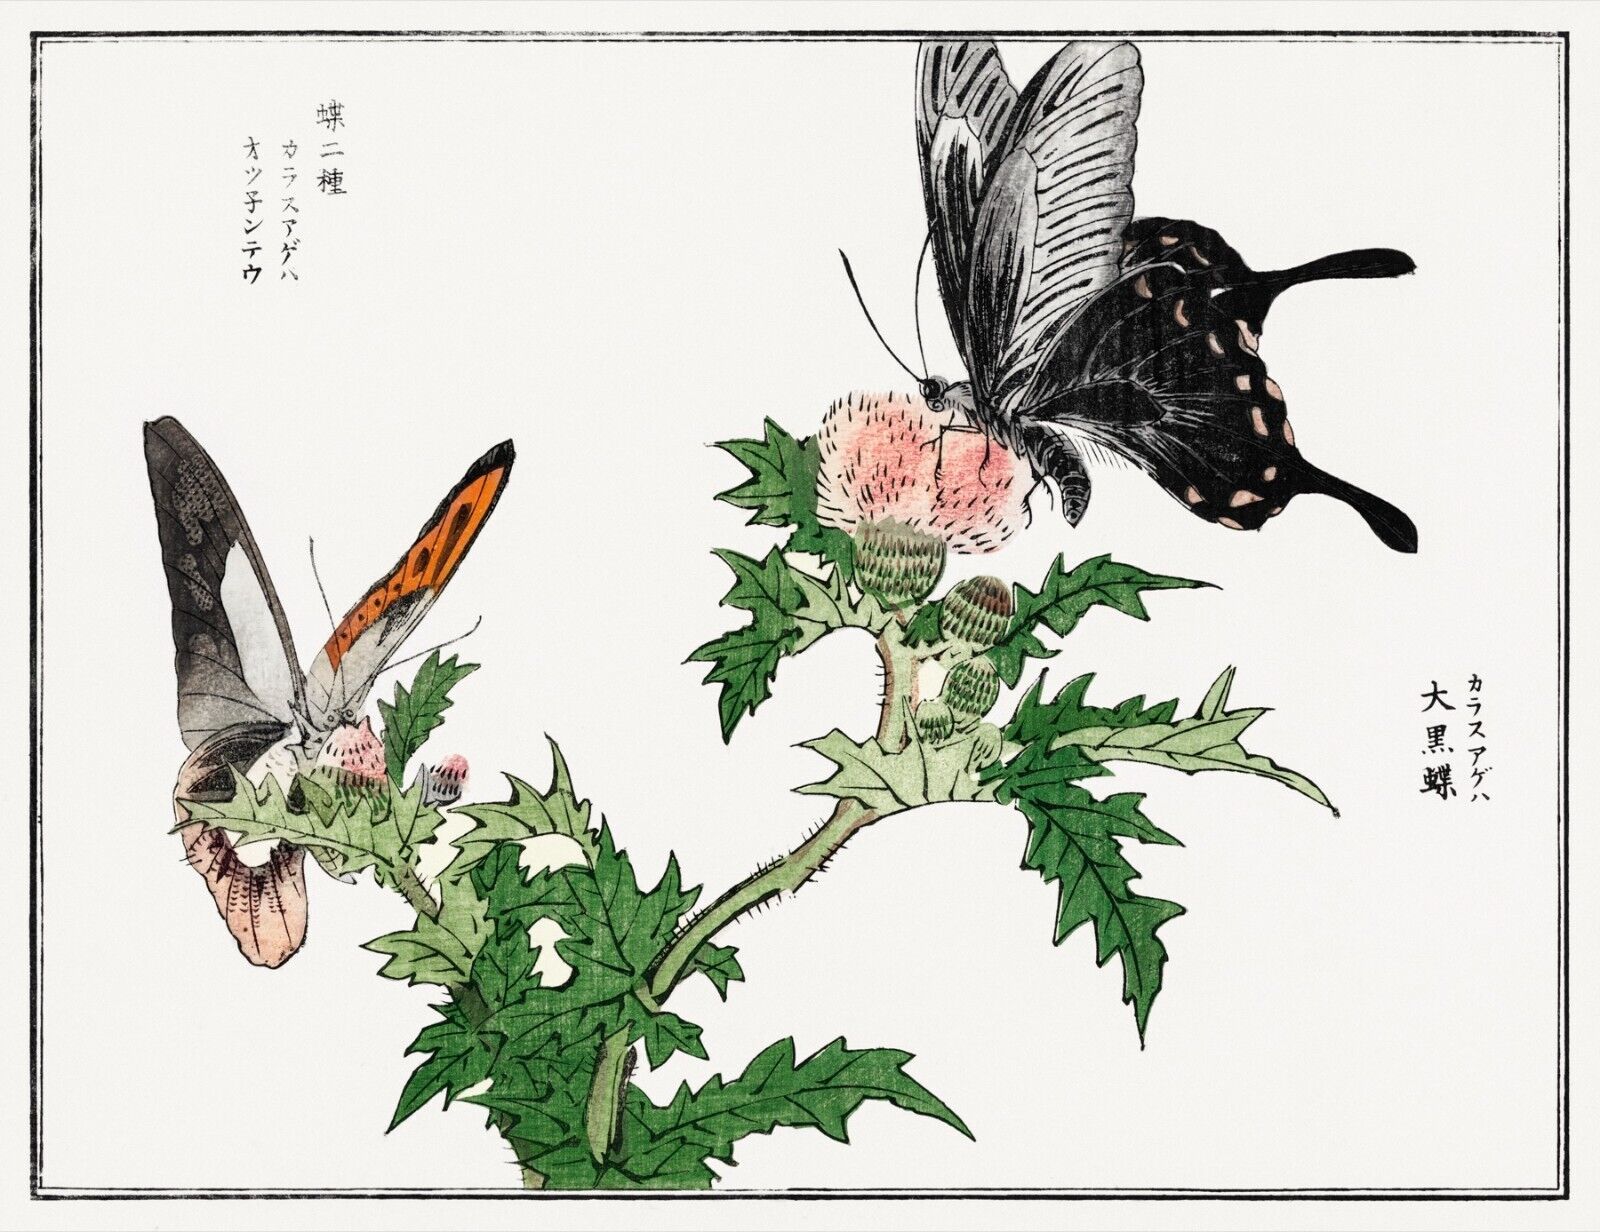 10058.Decor Poster.Room home wall.1910 Japan print.Morimoto Toko art.Butterflies